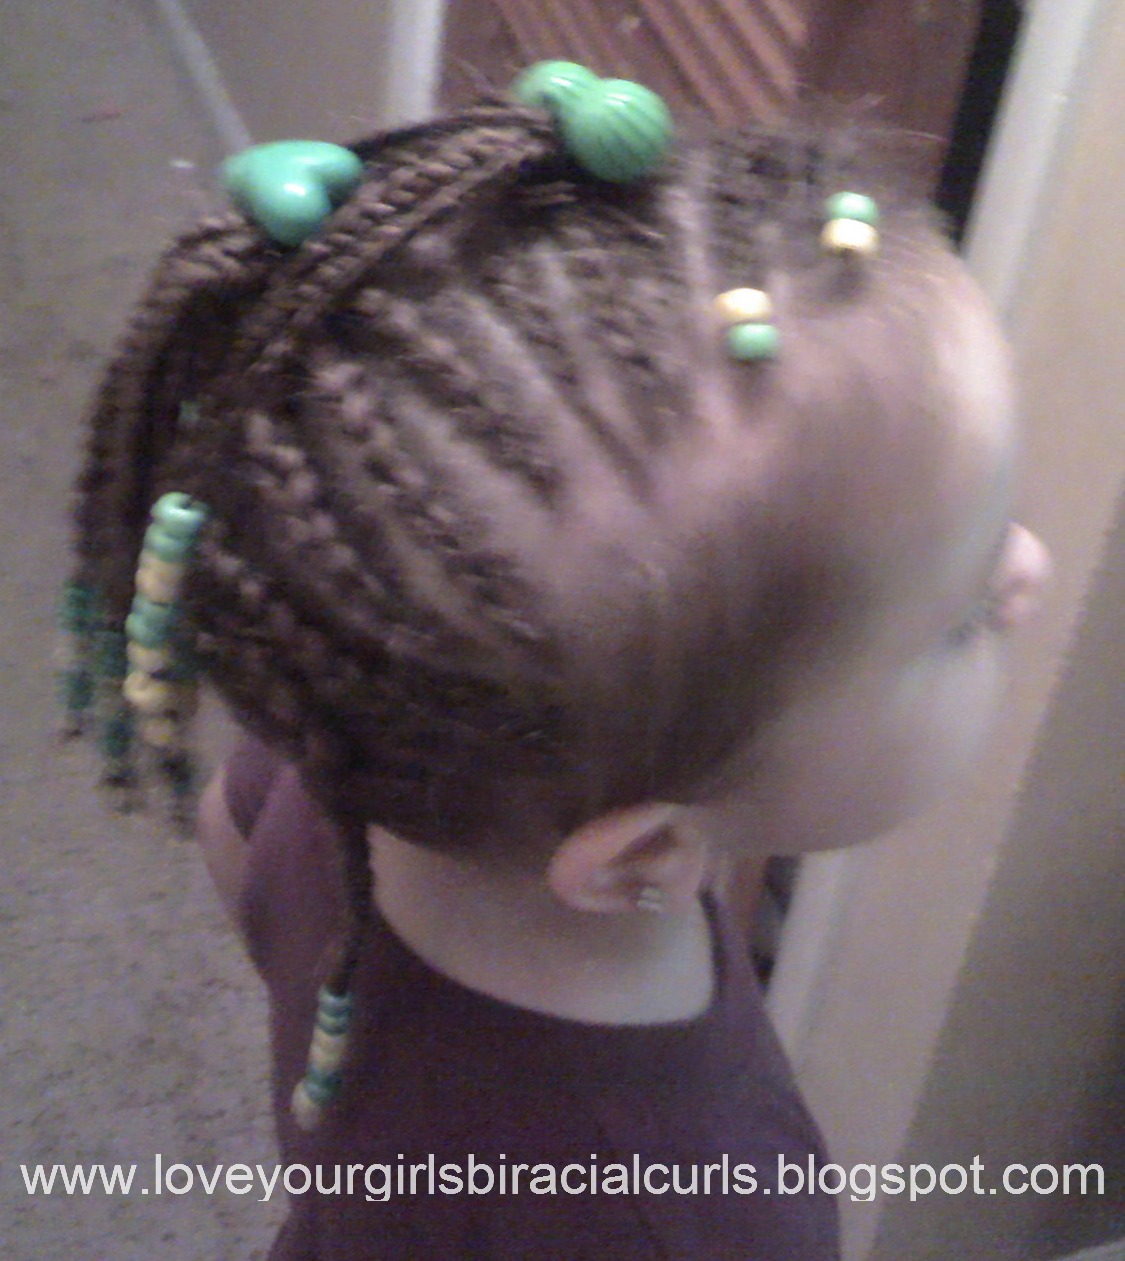 Keyative Styles: November 2011  Ethnic hairstyles, Lil girl hairstyles,  Hair styles